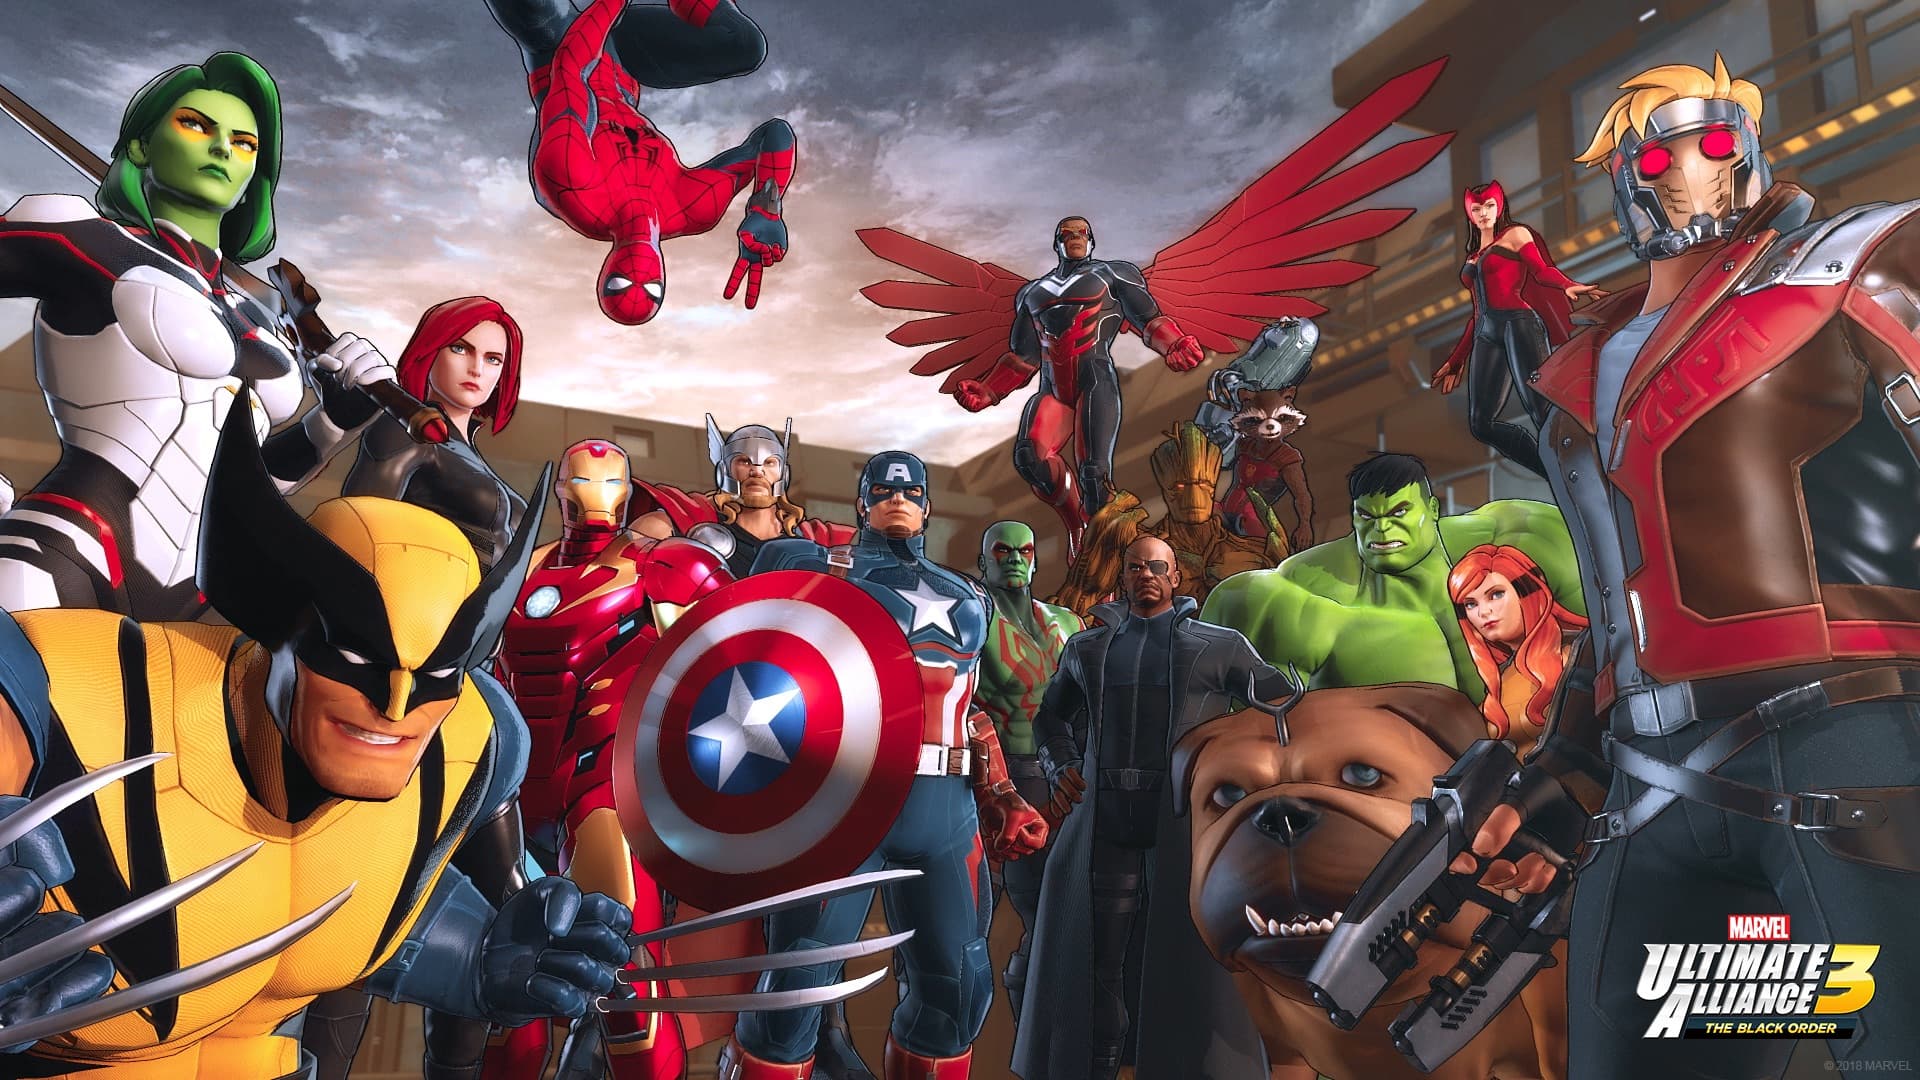 Marvel Ultimate Alliance 3 - Group Shot